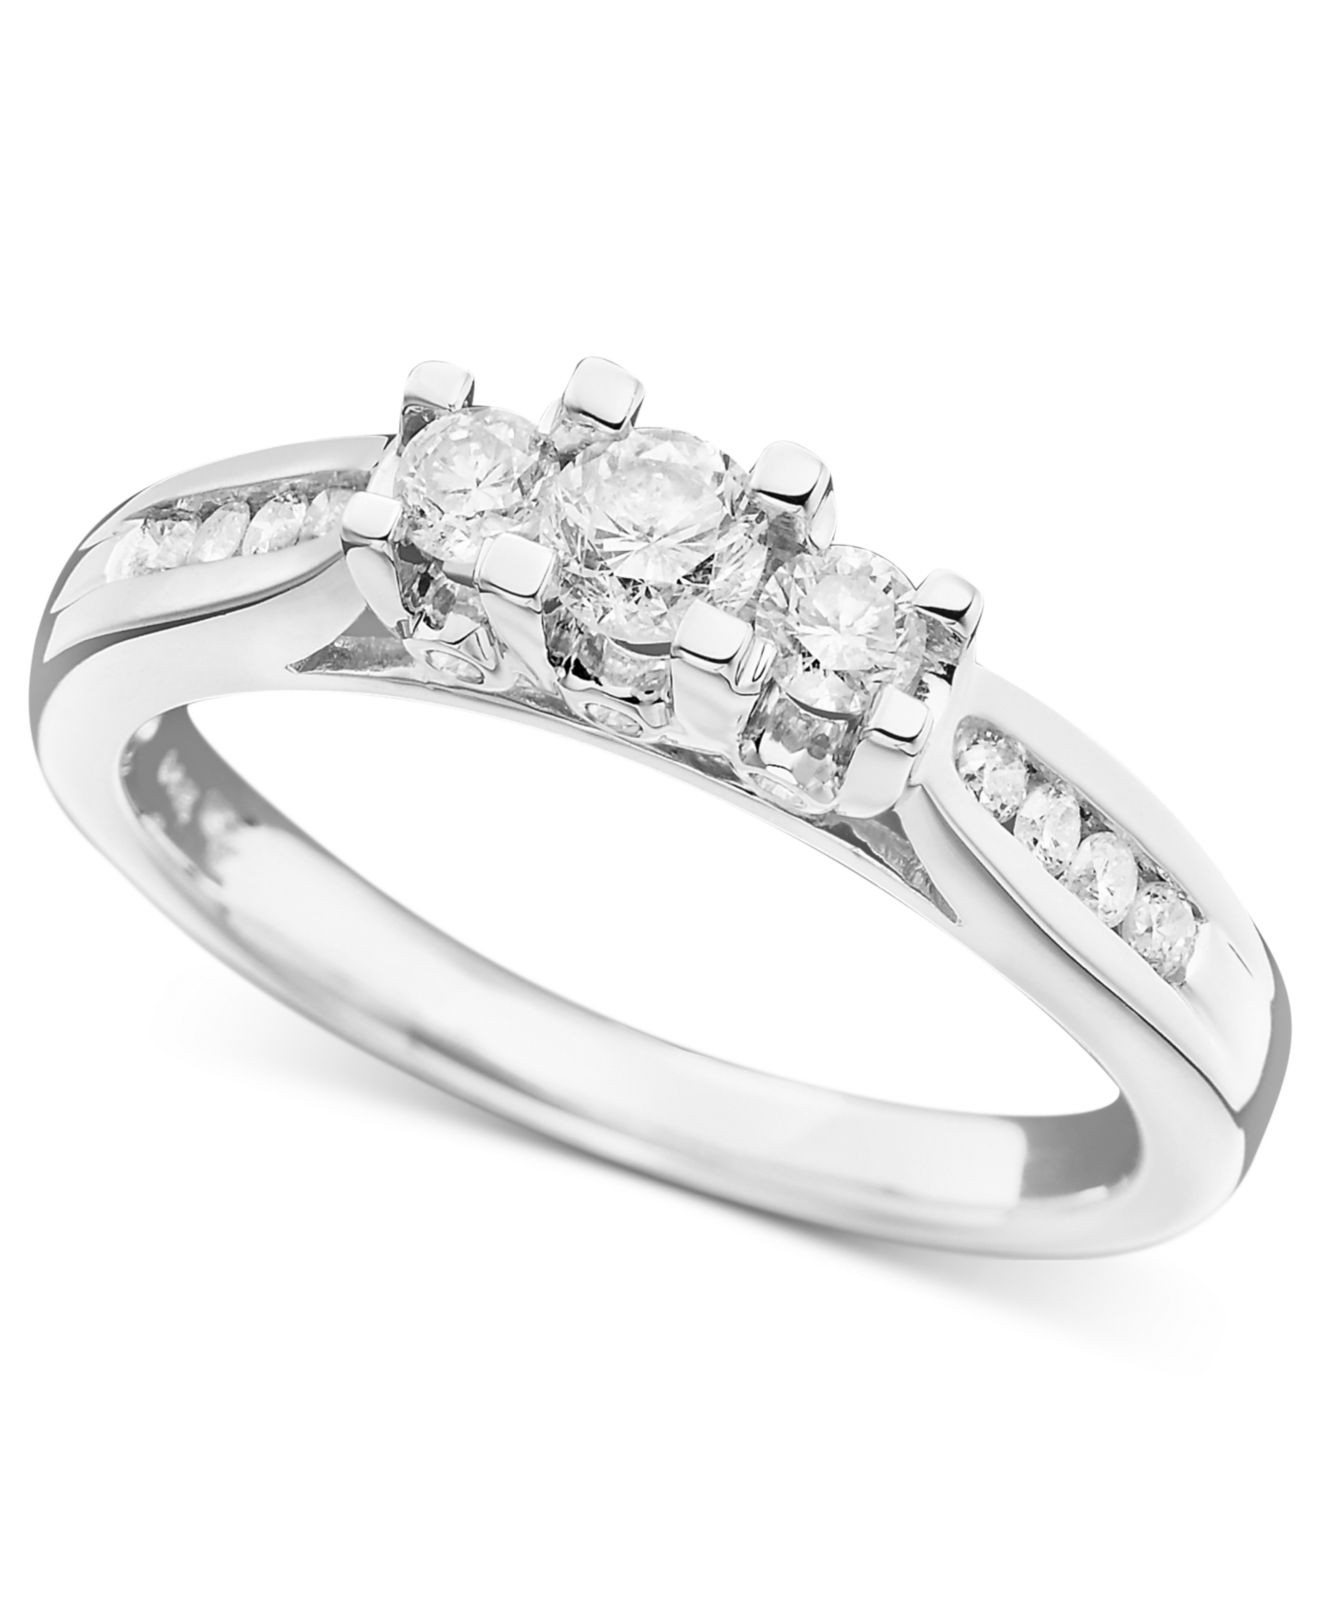 Macys Diamond Rings
 Macy s Three stone Diamond Ring In 14k Gold White Gold